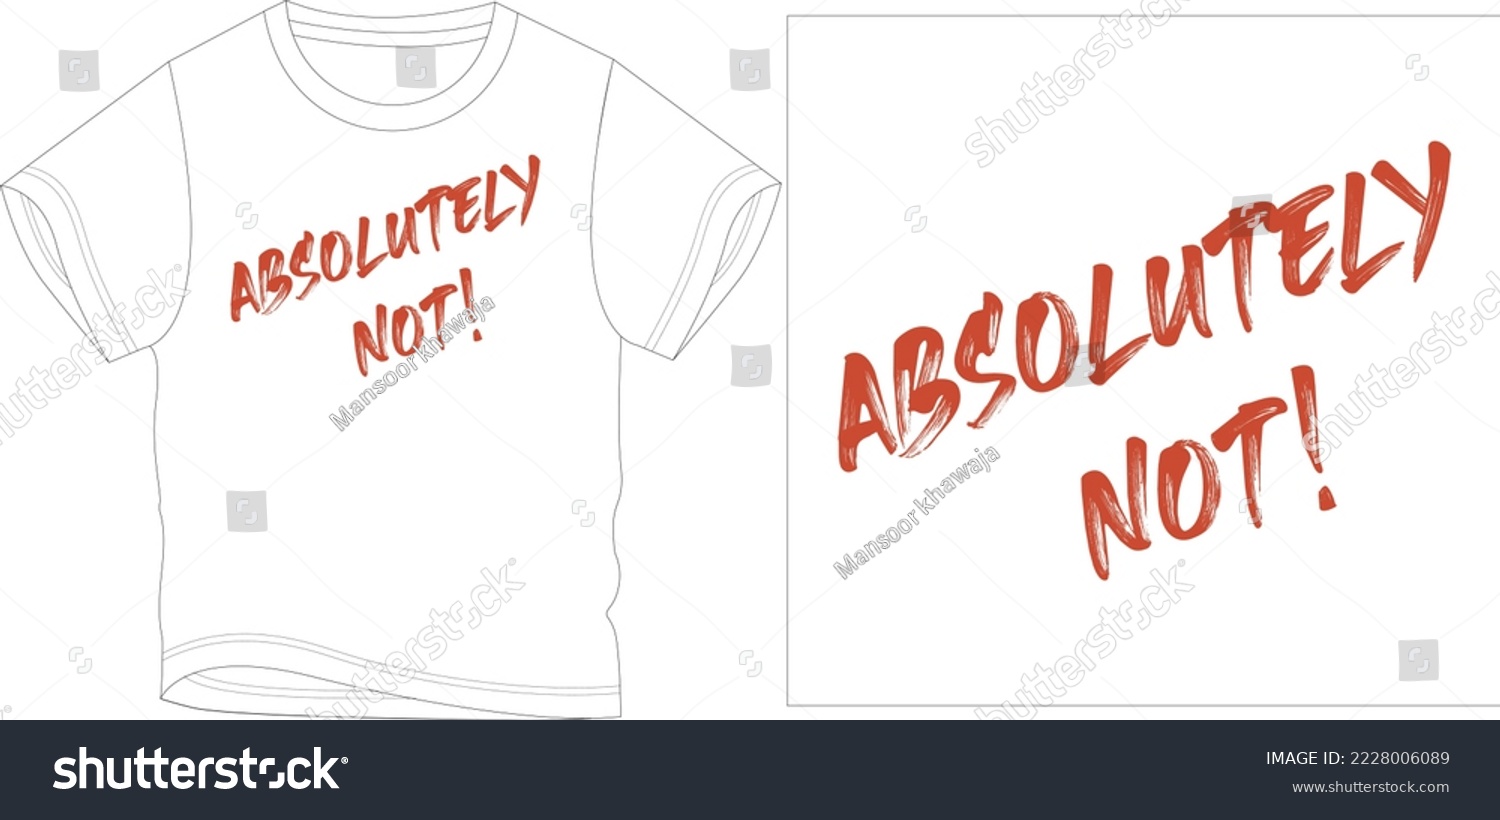 SVG of absolutely not imran khan.
t shirt graphic design vector illustration digital file
 svg